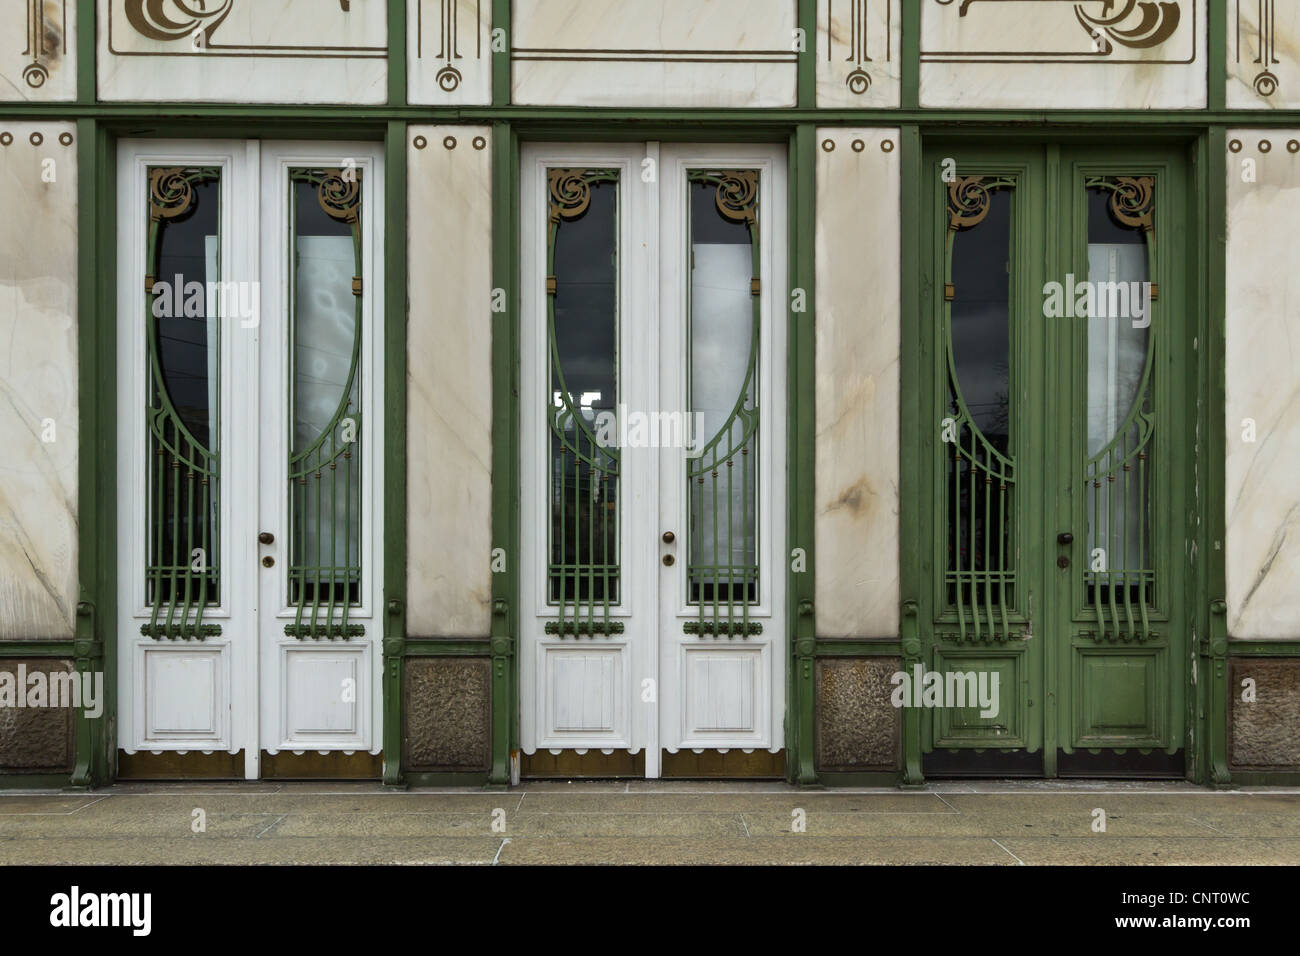 Art nouveau doors hi-res stock photography and images - Alamy